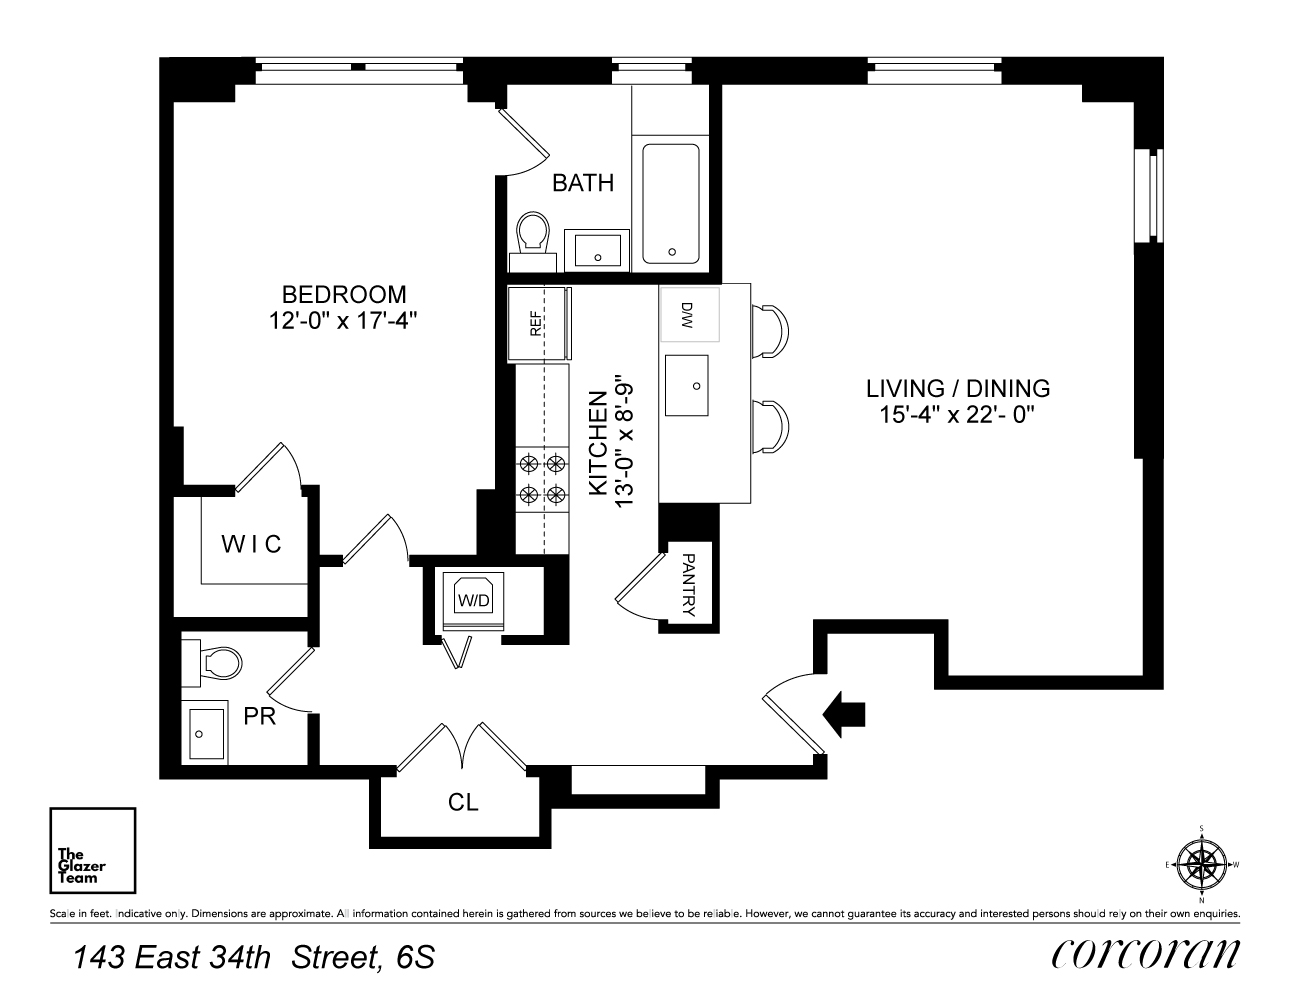 Floorplan for 143 East 34th Street, 6S